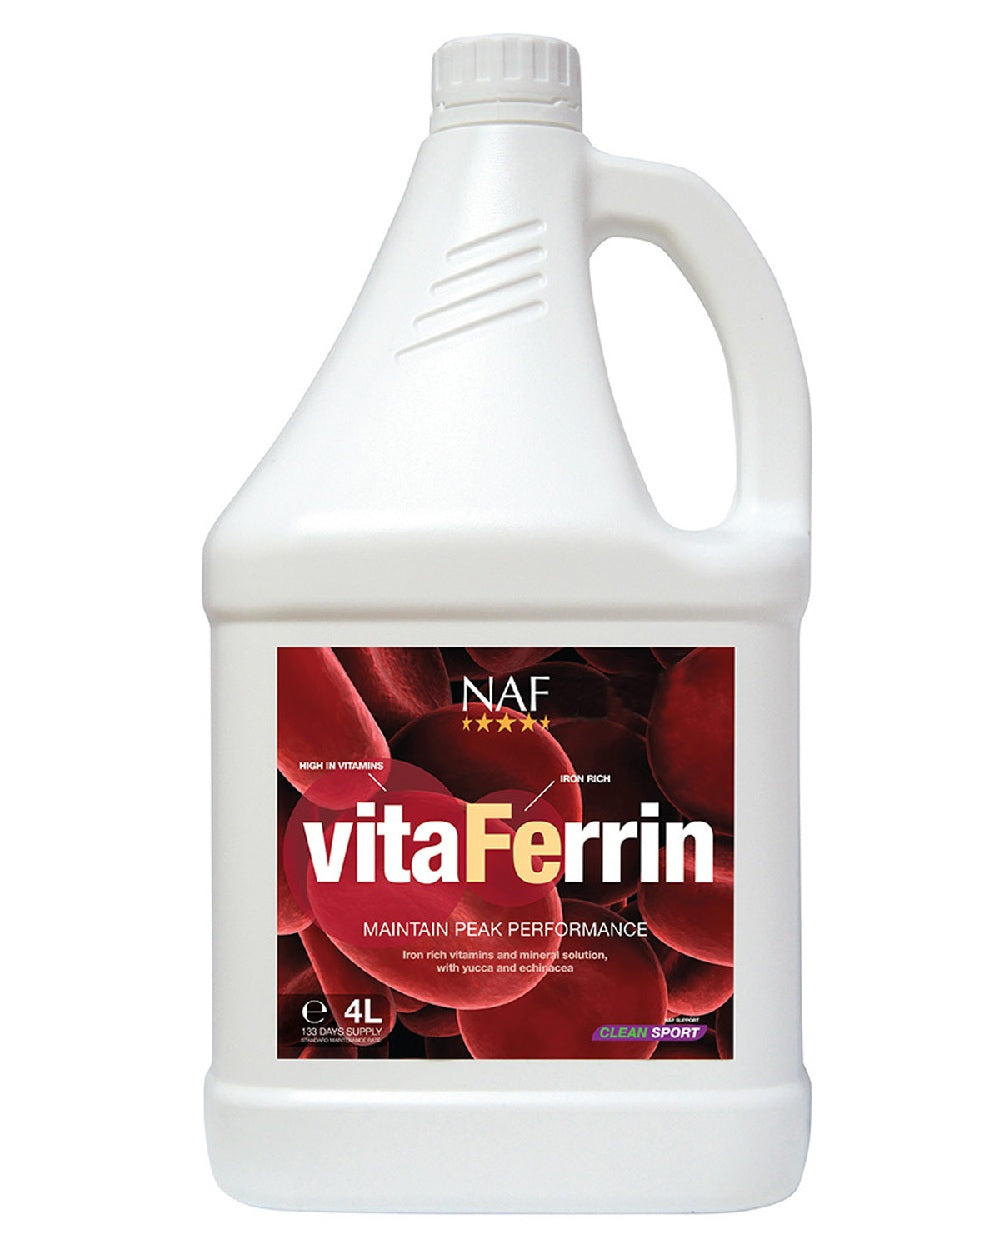 NAF Five Star Vitaferrin 4lt on white background